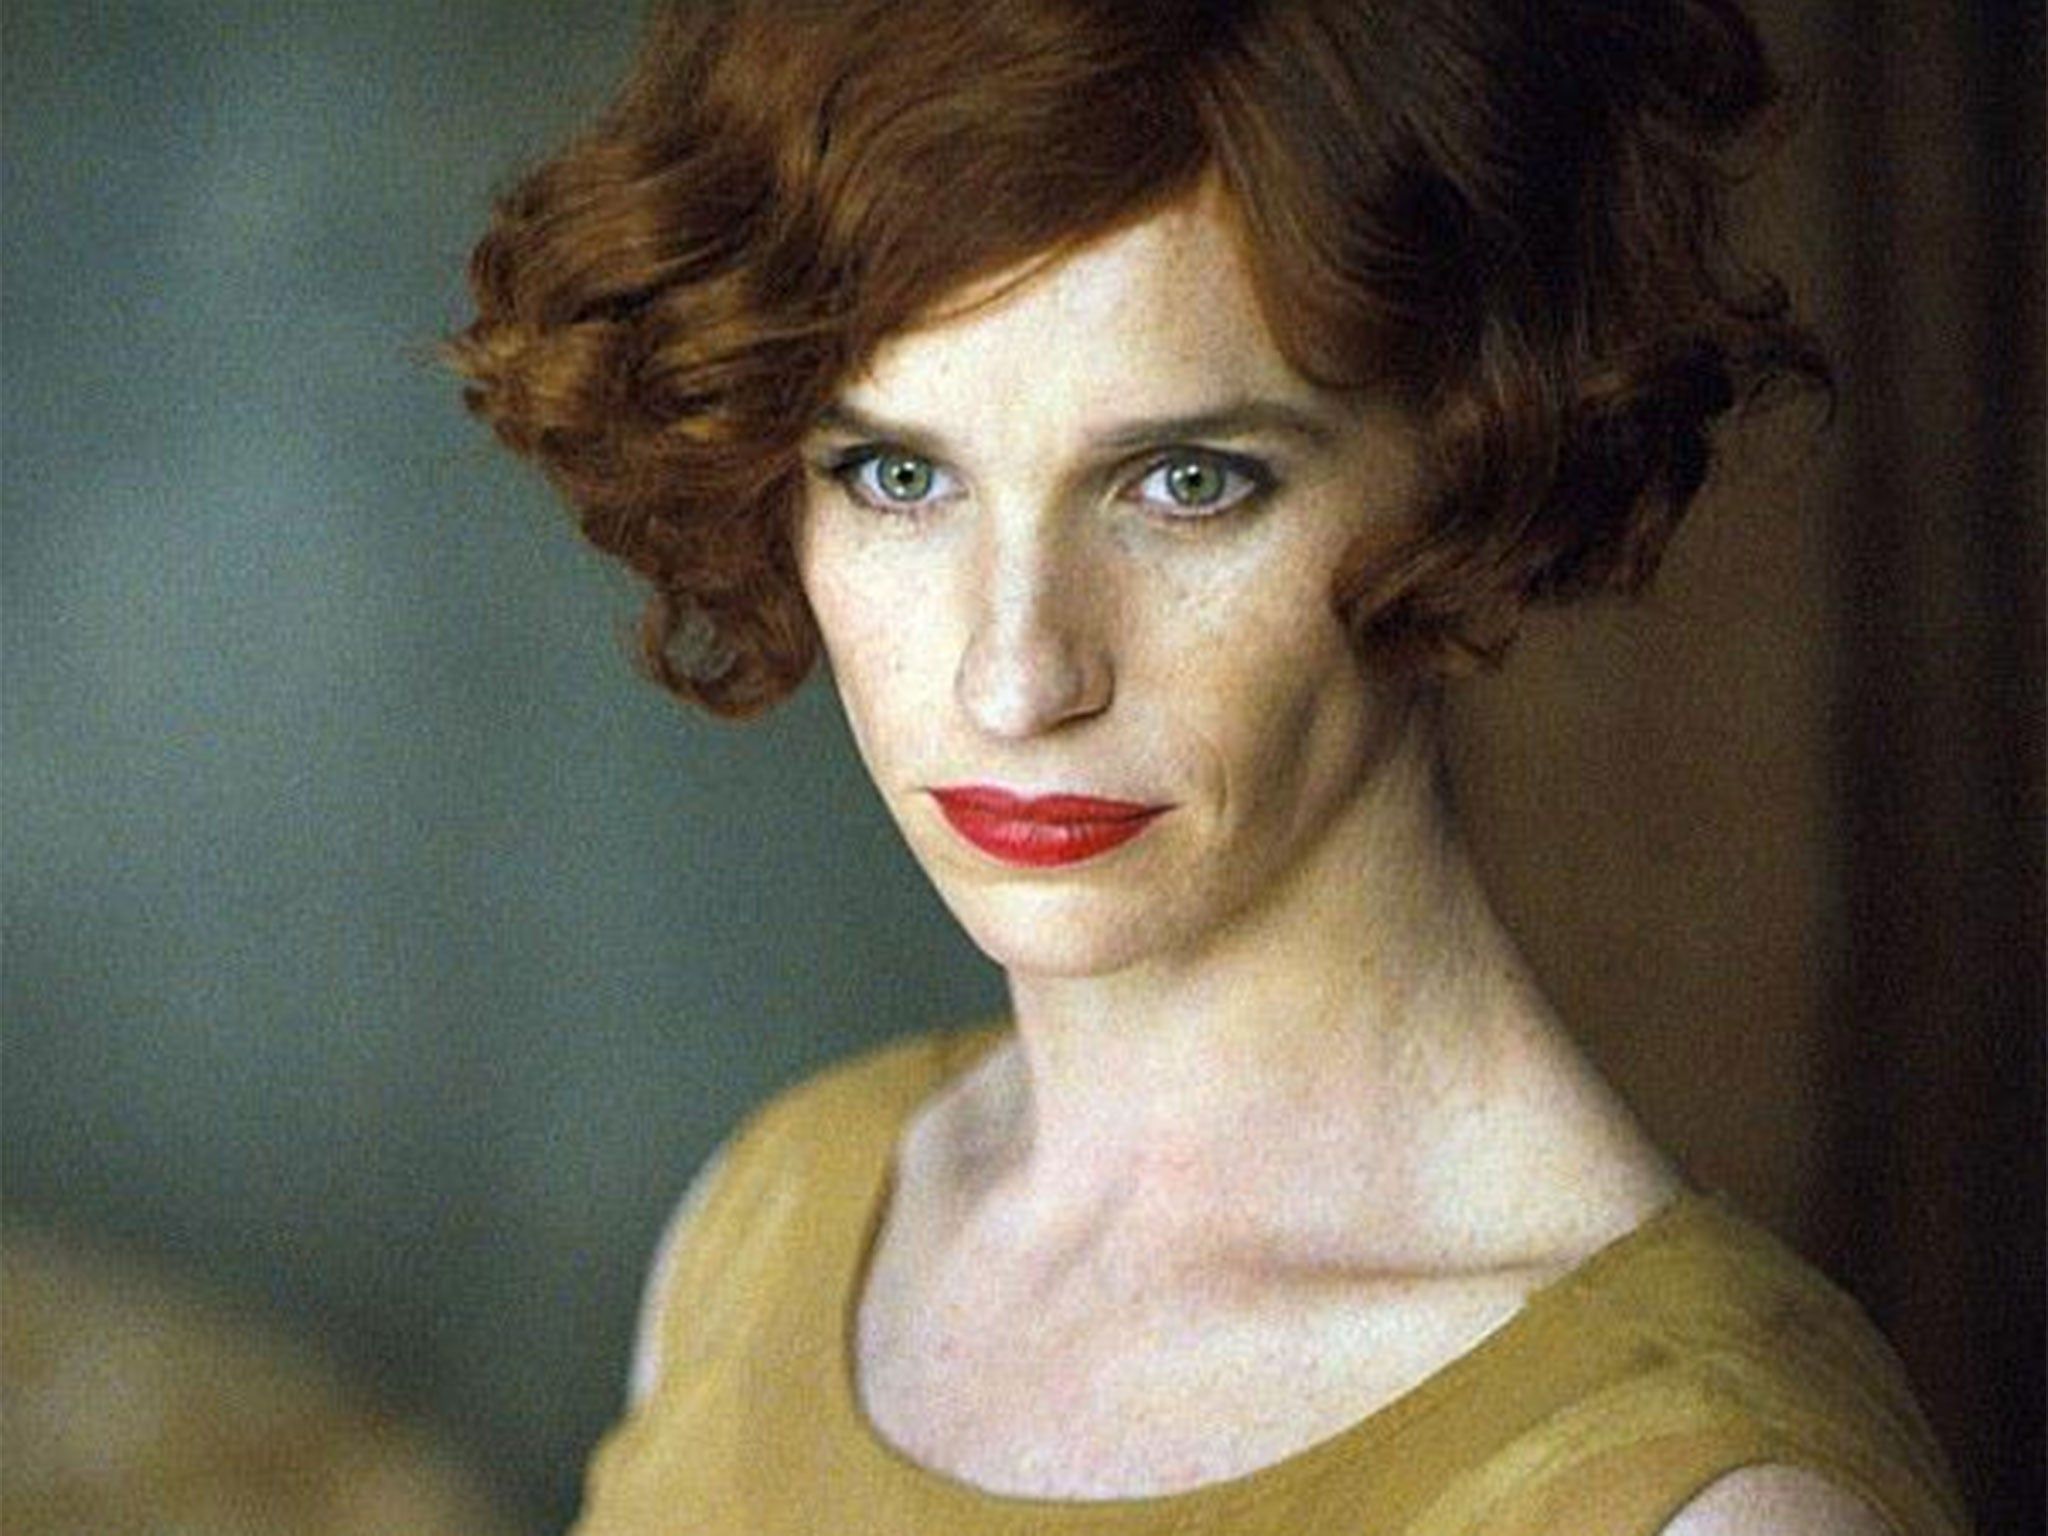 Eddie Redmayne in The Danish Girl: First look at Oscar winner as transgender artist